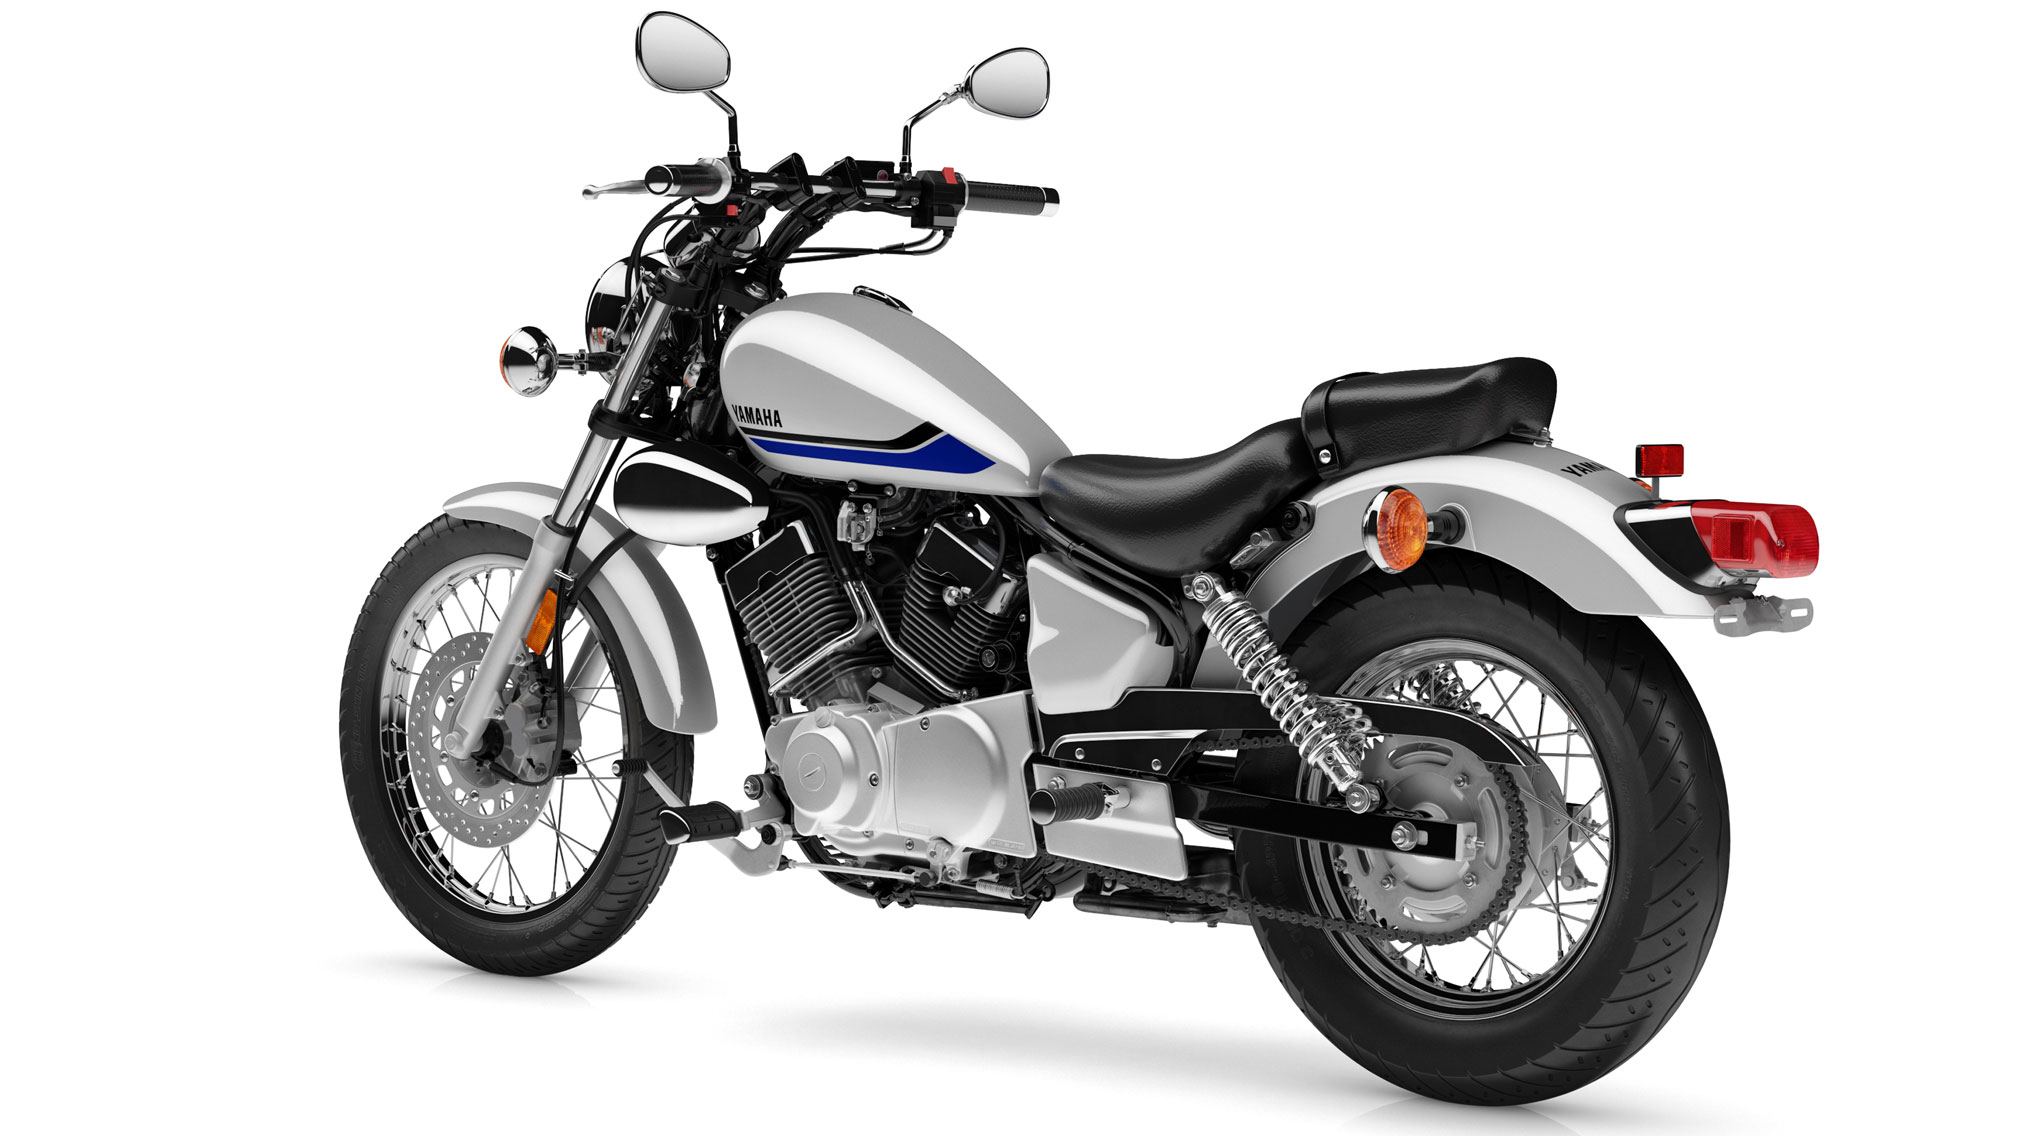 2019 Yamaha V-Star 250 Guide • Total Motorcycle